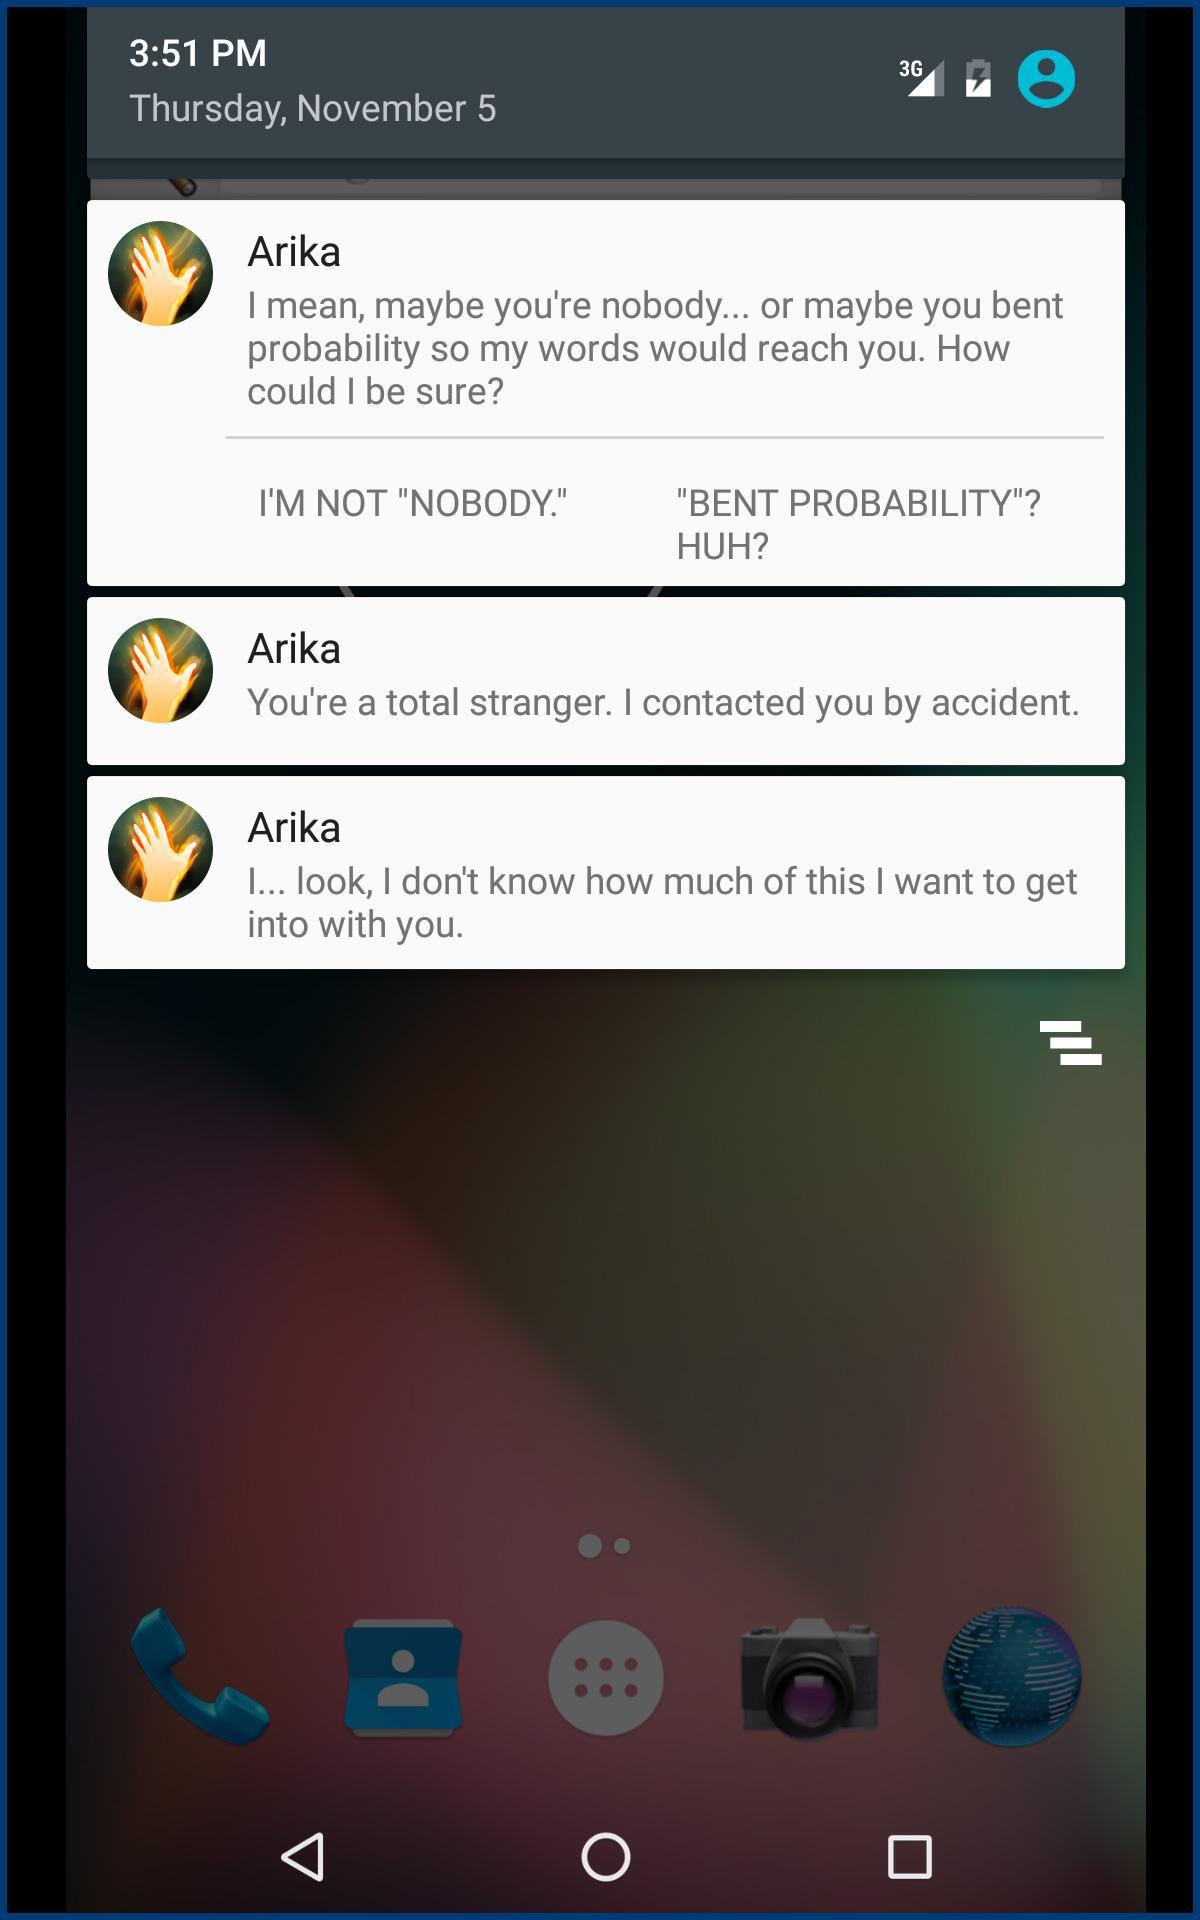 Lifeline 2 For Android Apk Download - lifeline 2 roblox